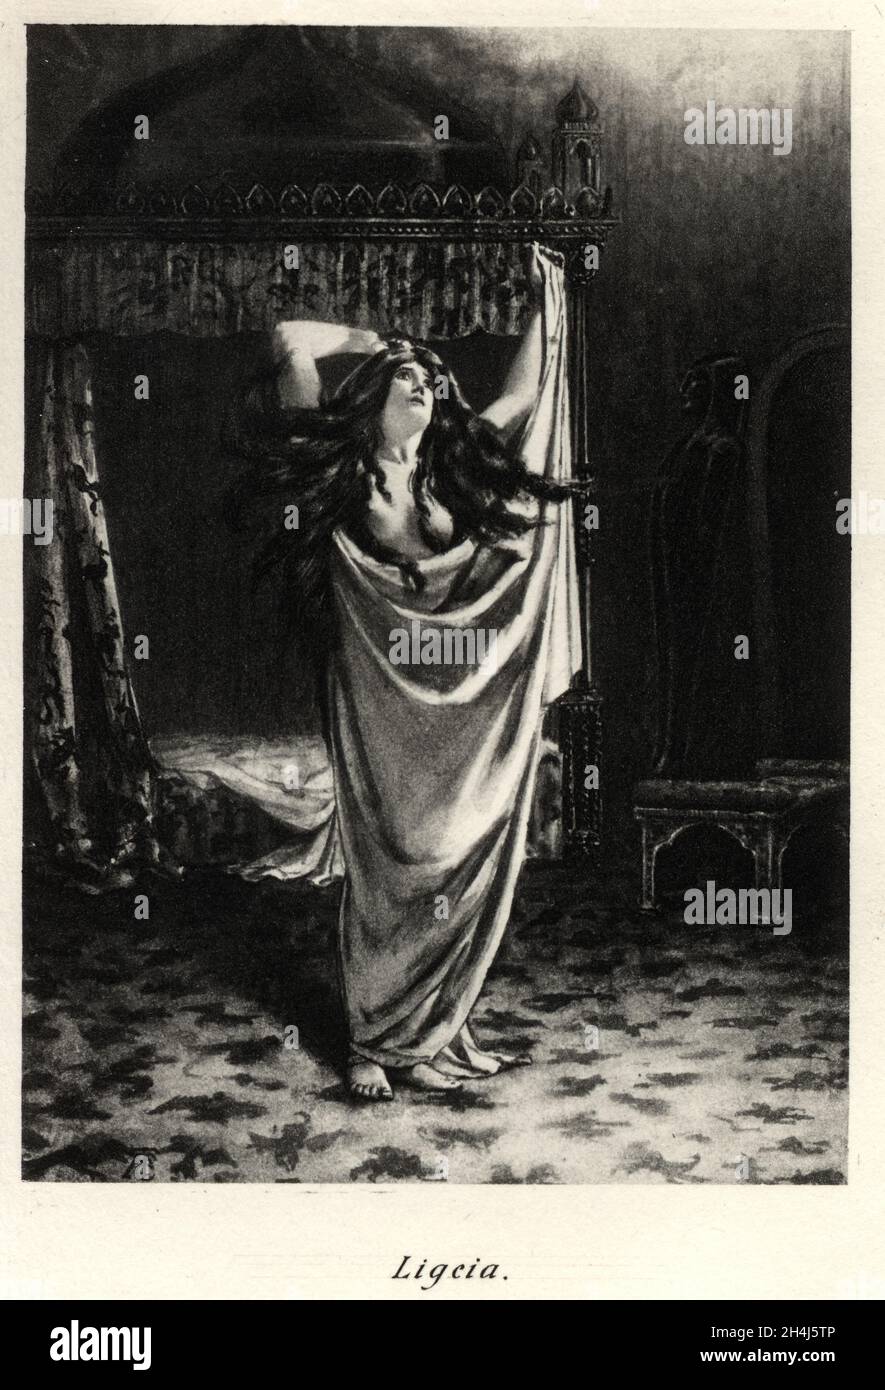 Scena da Ligeia, di Edgar Allan PoE Foto Stock